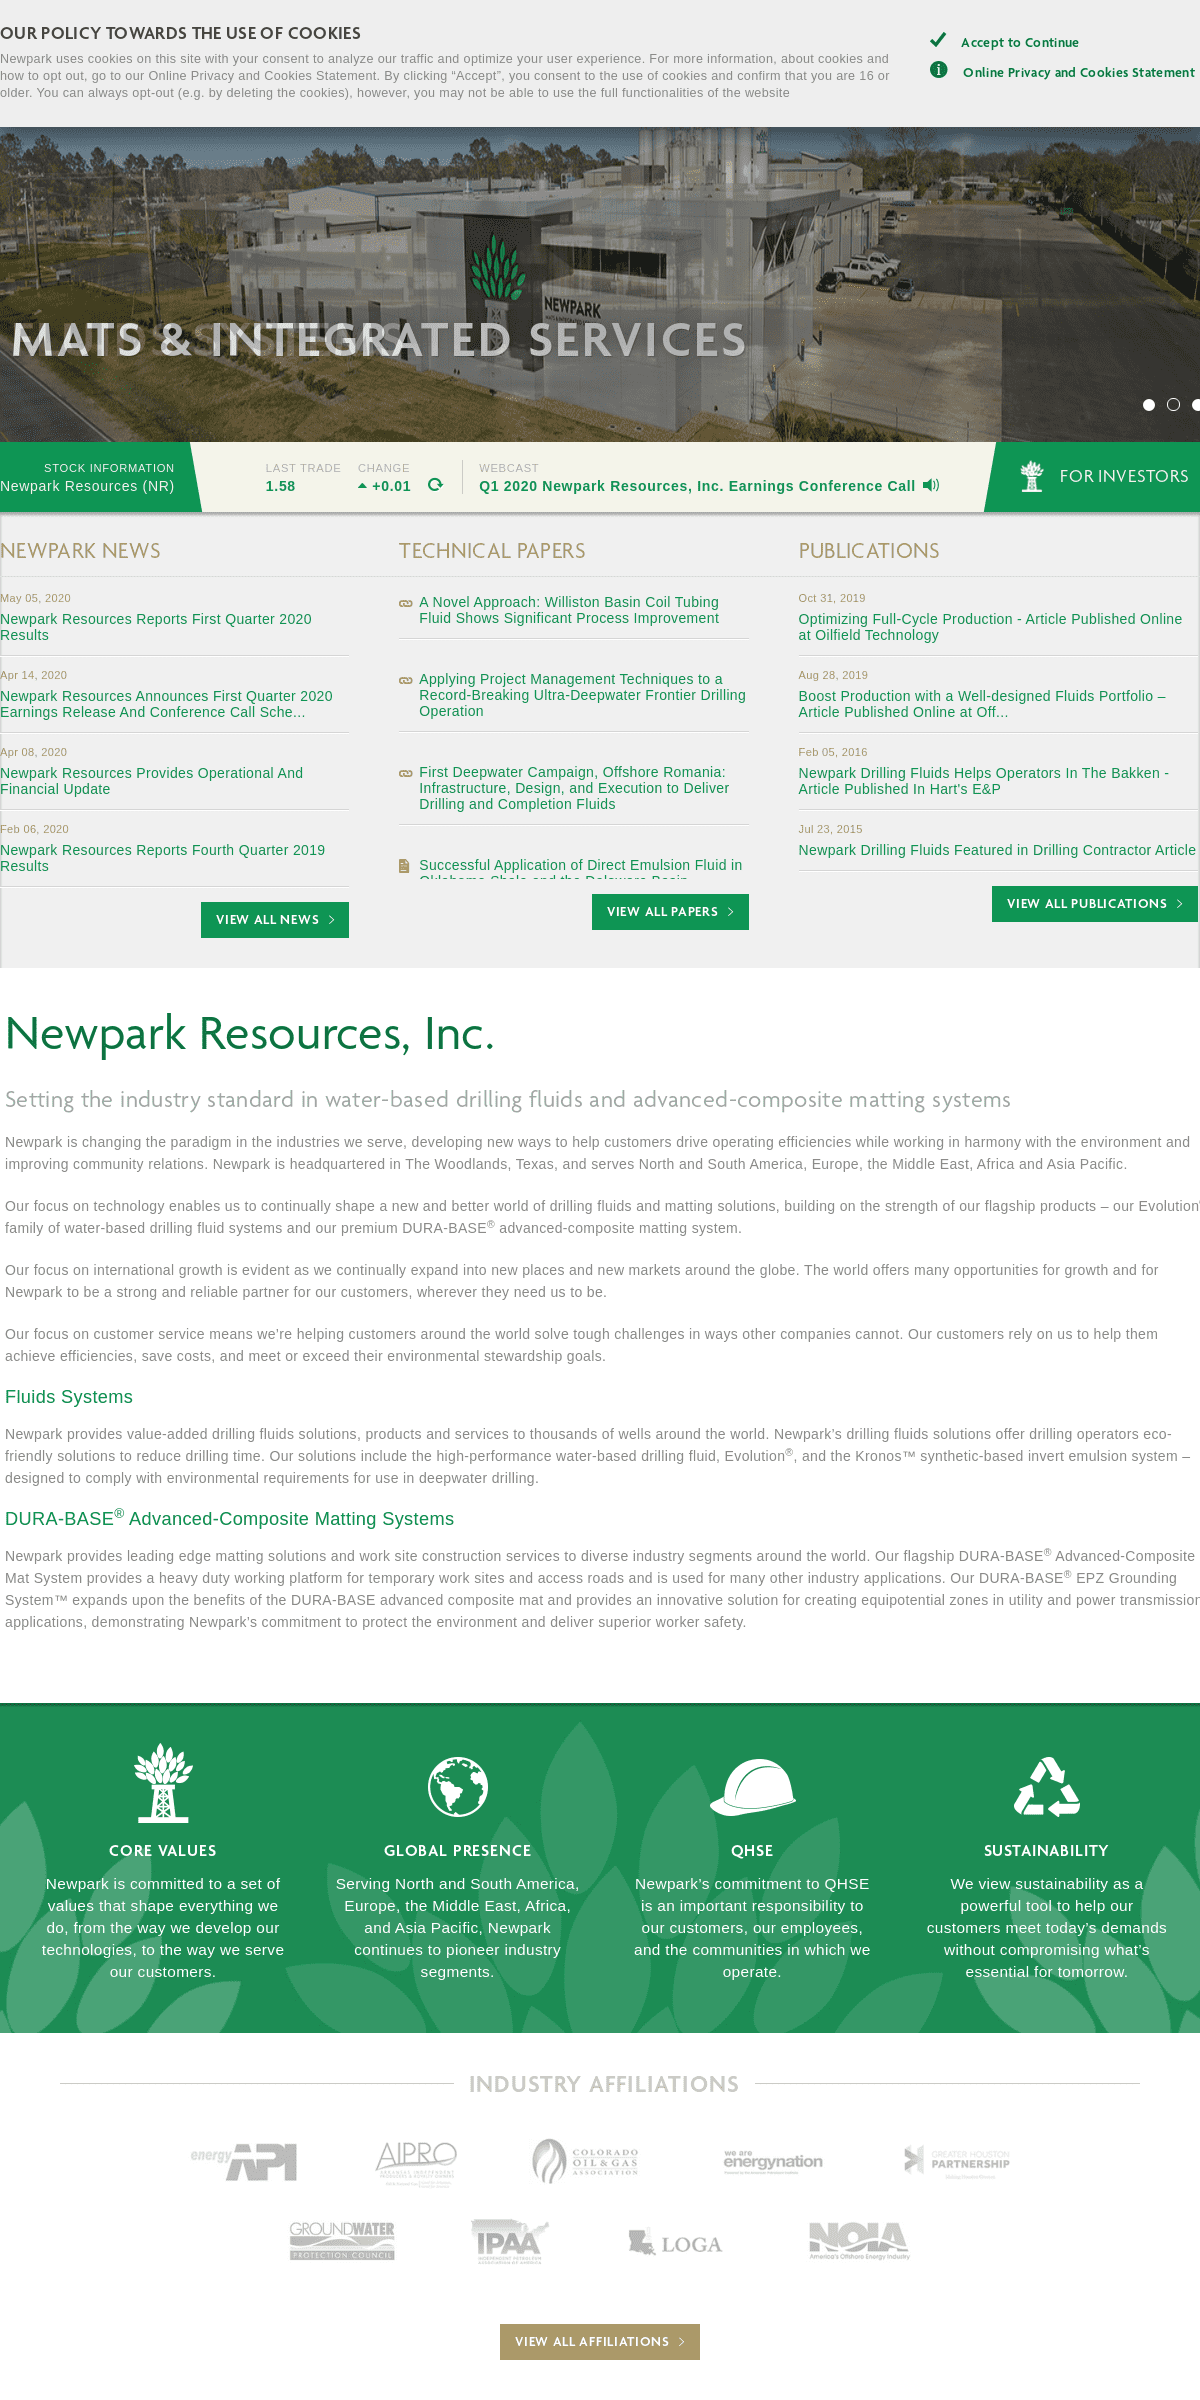 A complete backup of newpark.com